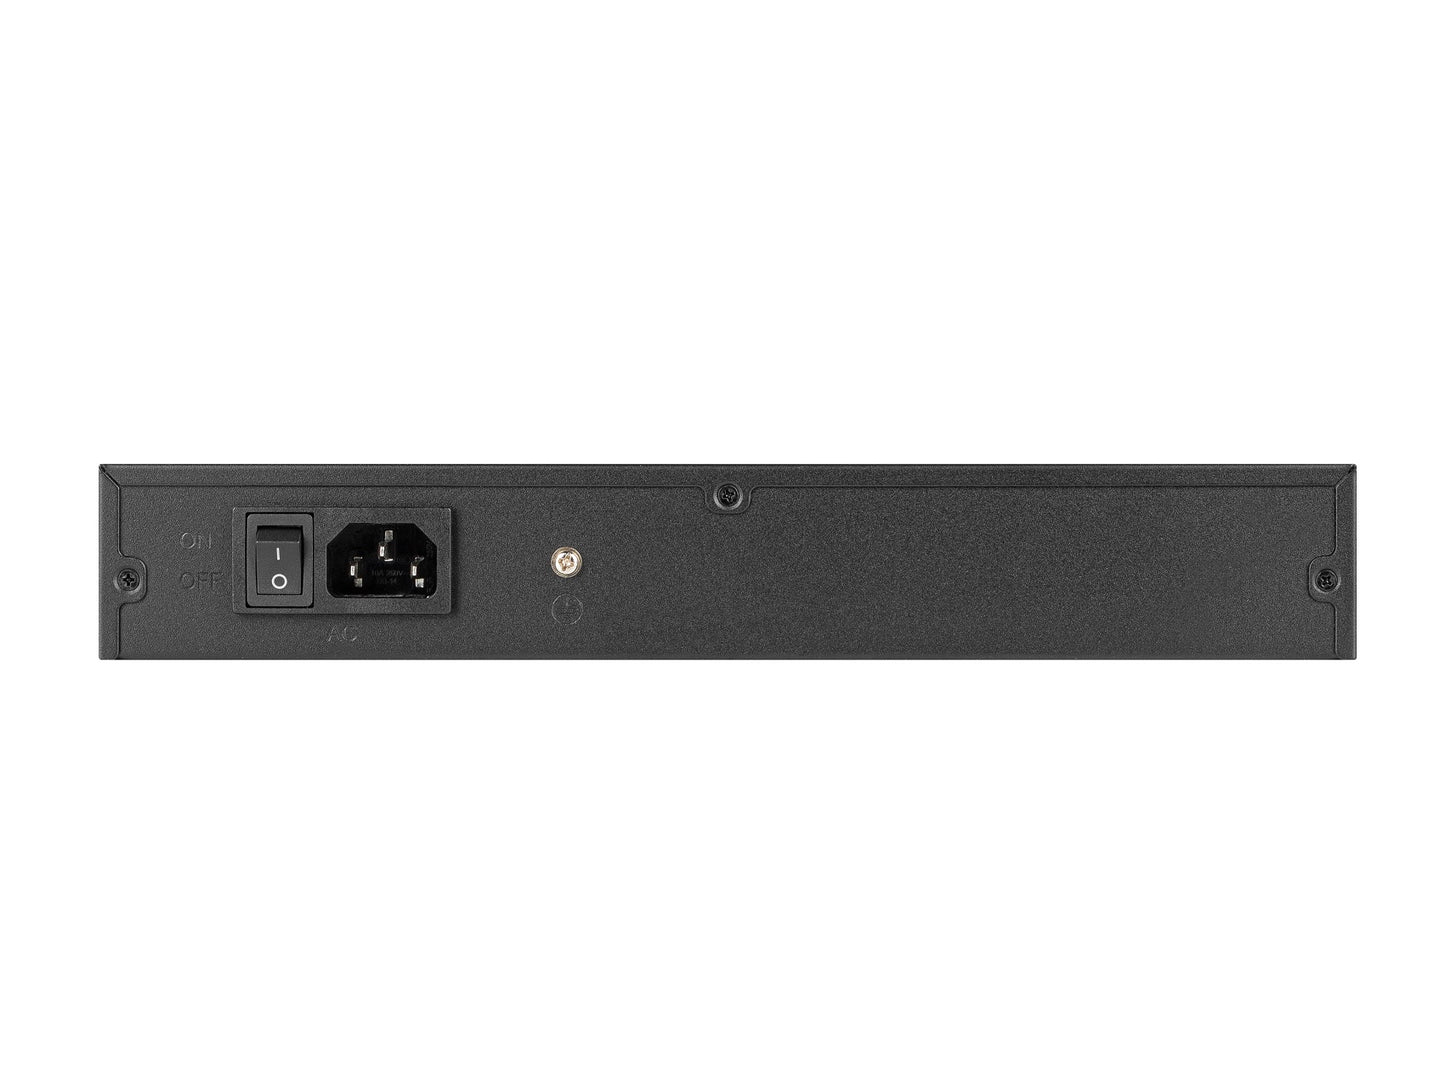 Lanberg RSGE-24 24 Port Gigabit Ethernet Switch Rackmounted